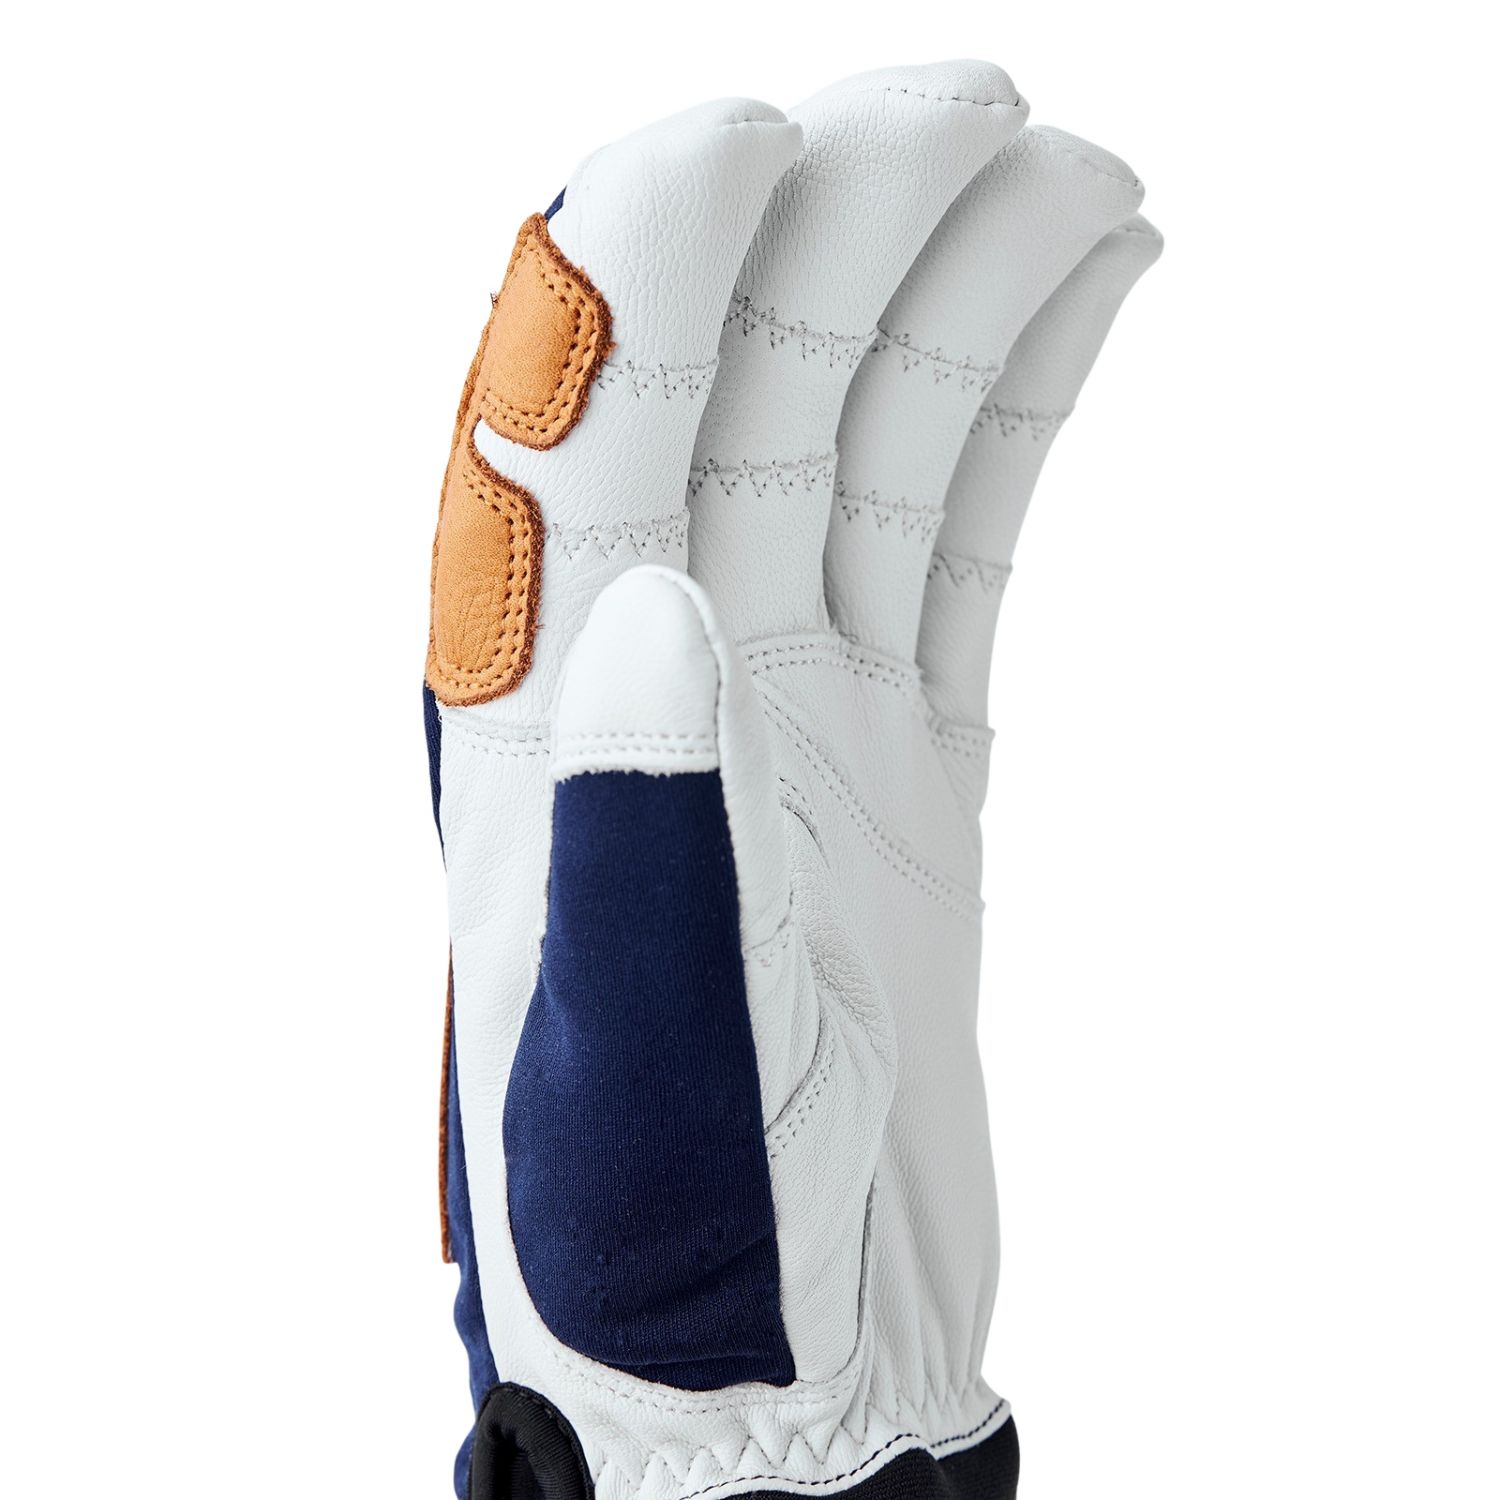 Hestra Ergo Grip Active Wool Terry, gants, navy/blanc